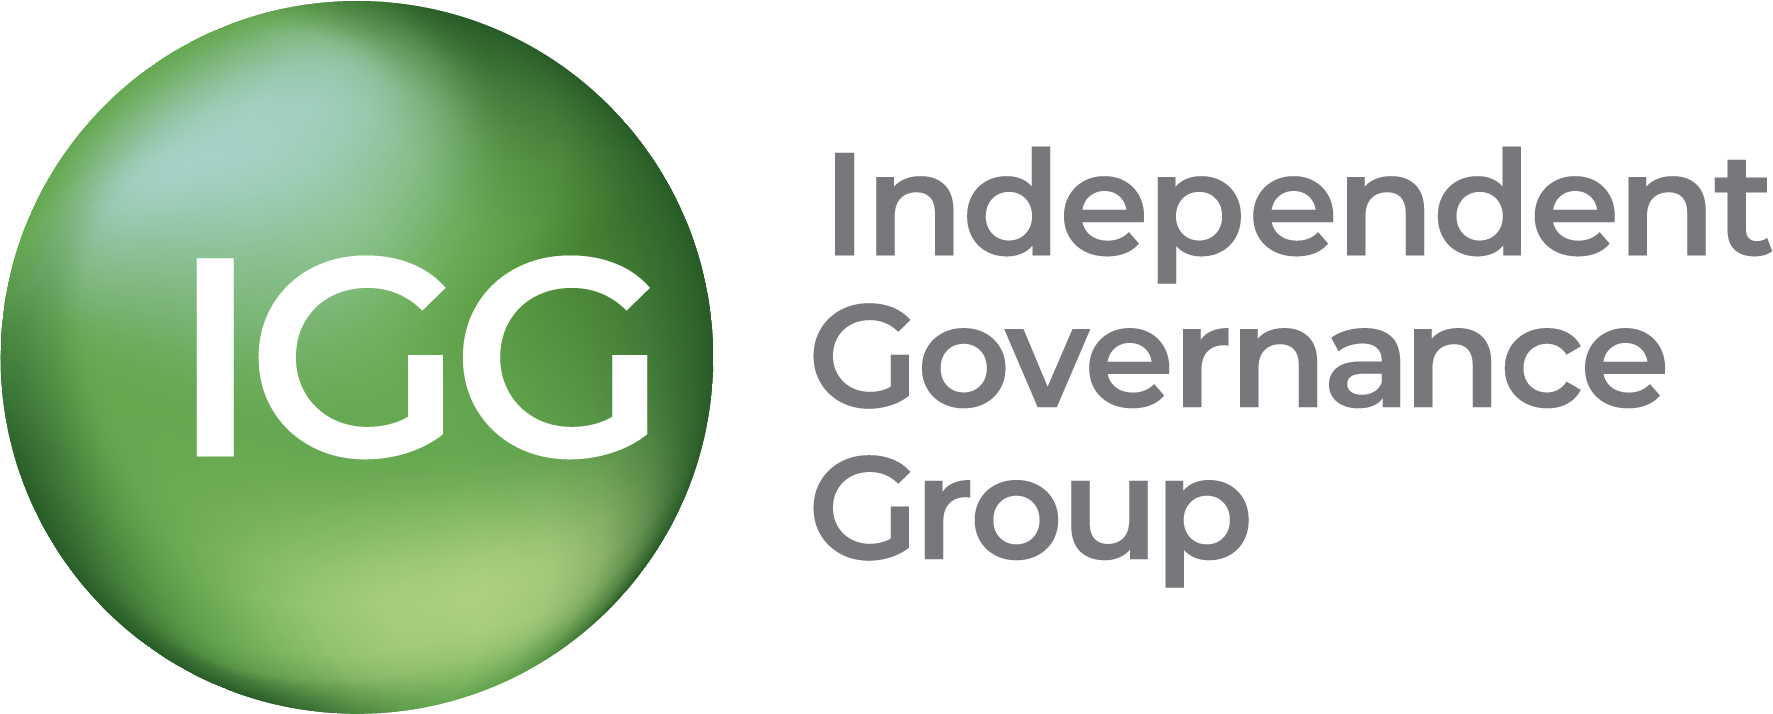 Independence Governance Group